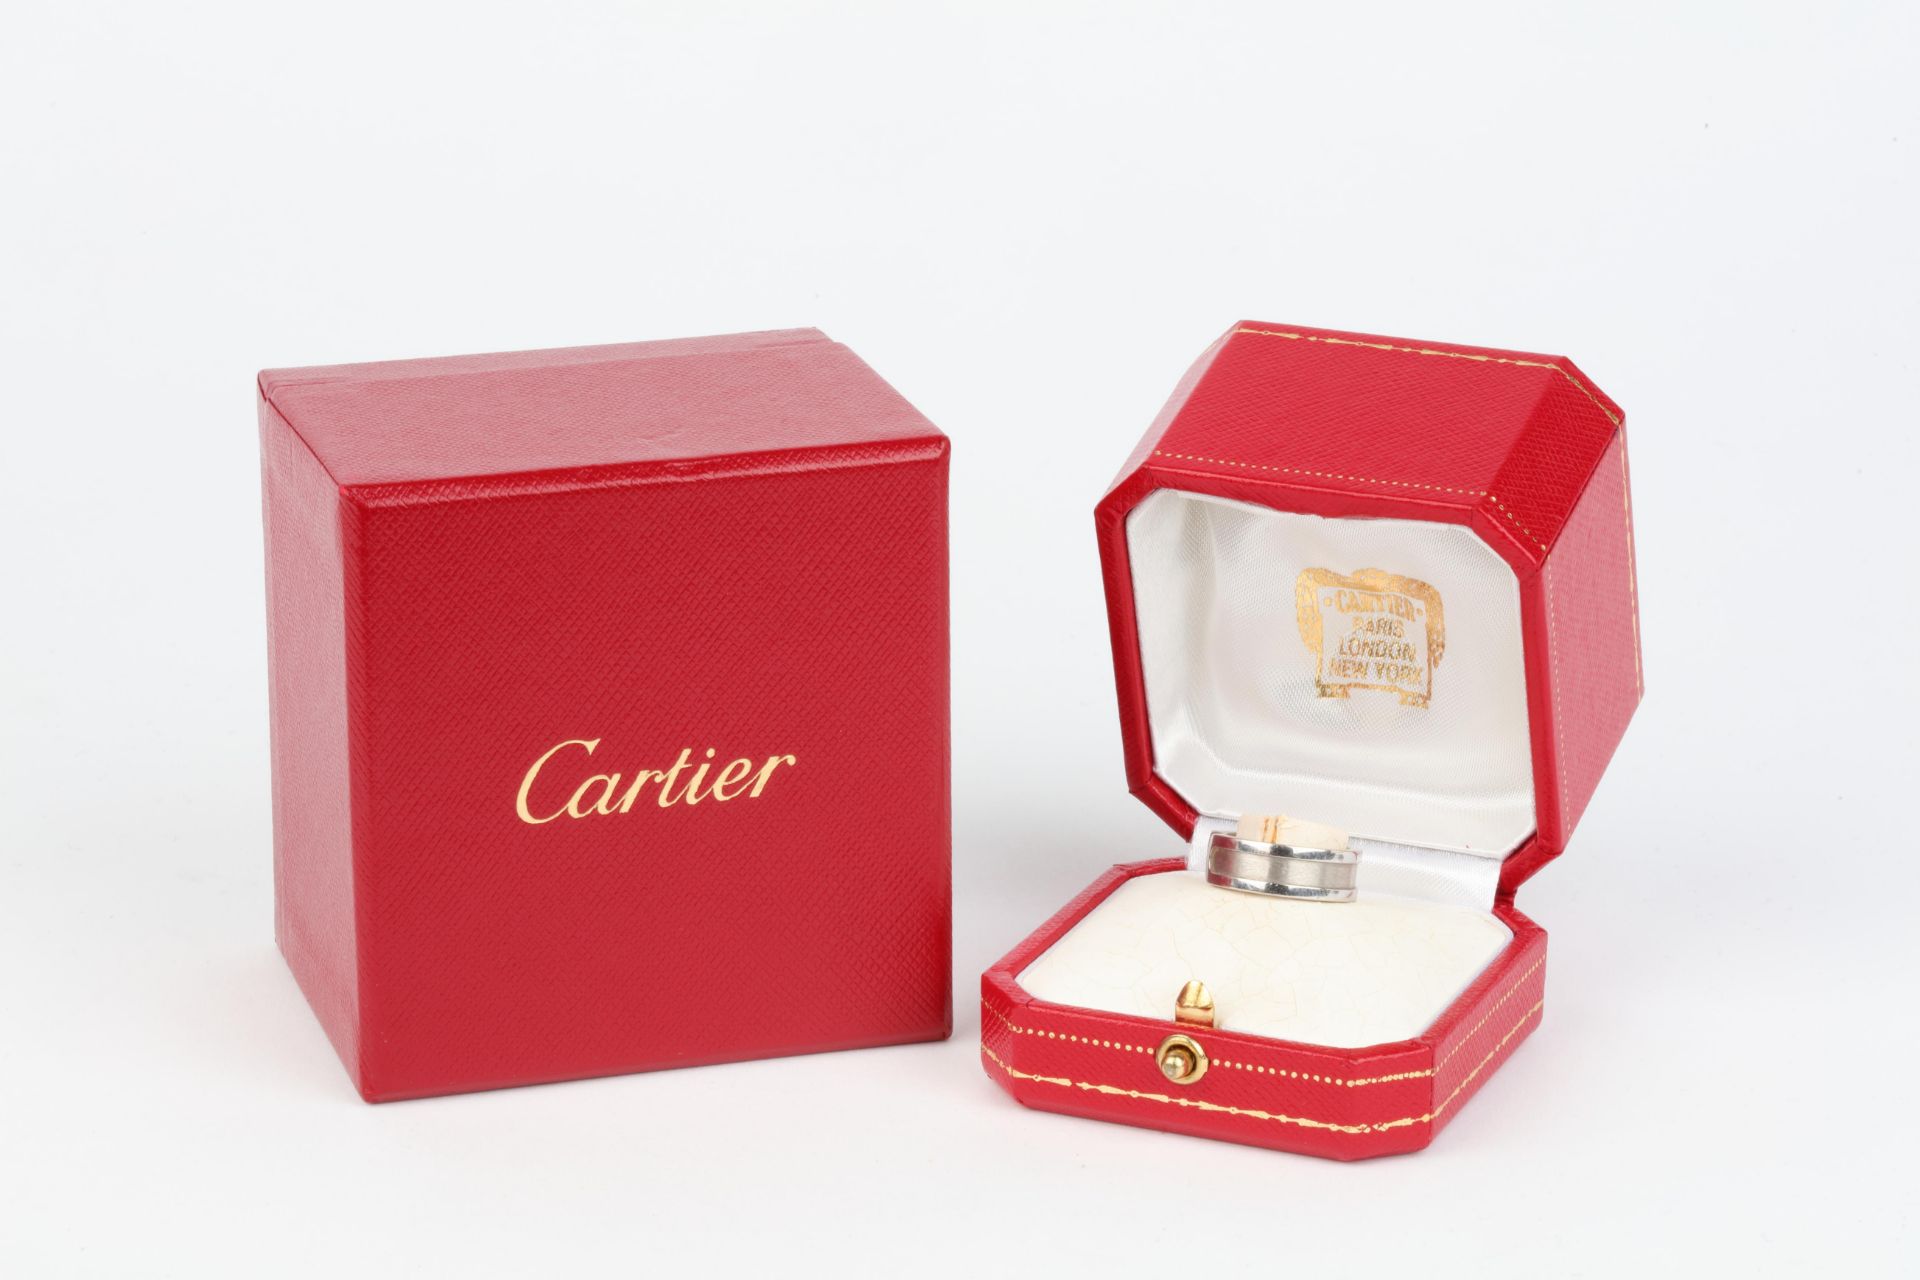 No VAT Cartier 18k White Gold C De Cartier Ring - Comes With Box - Image 3 of 3